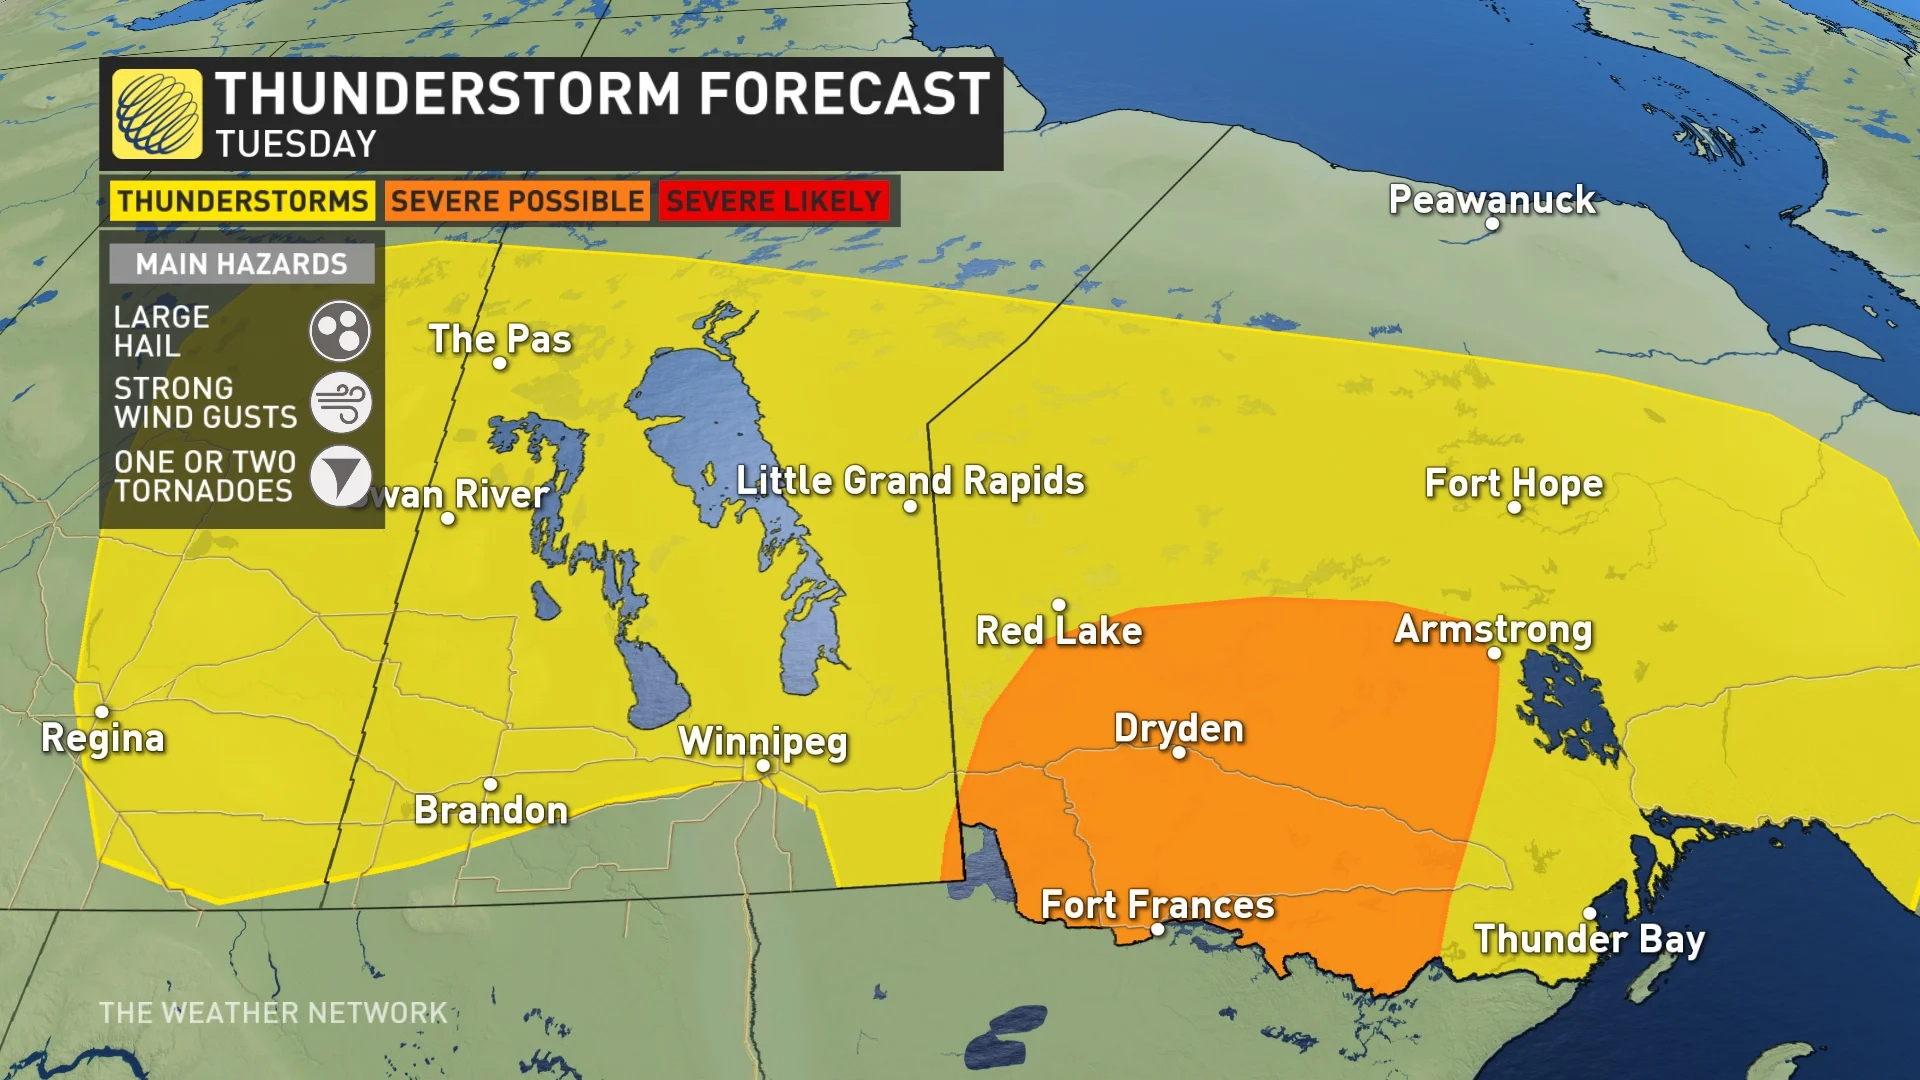 Baron - Tuesday thunderstorm risk northwestern Ontario UPDATED